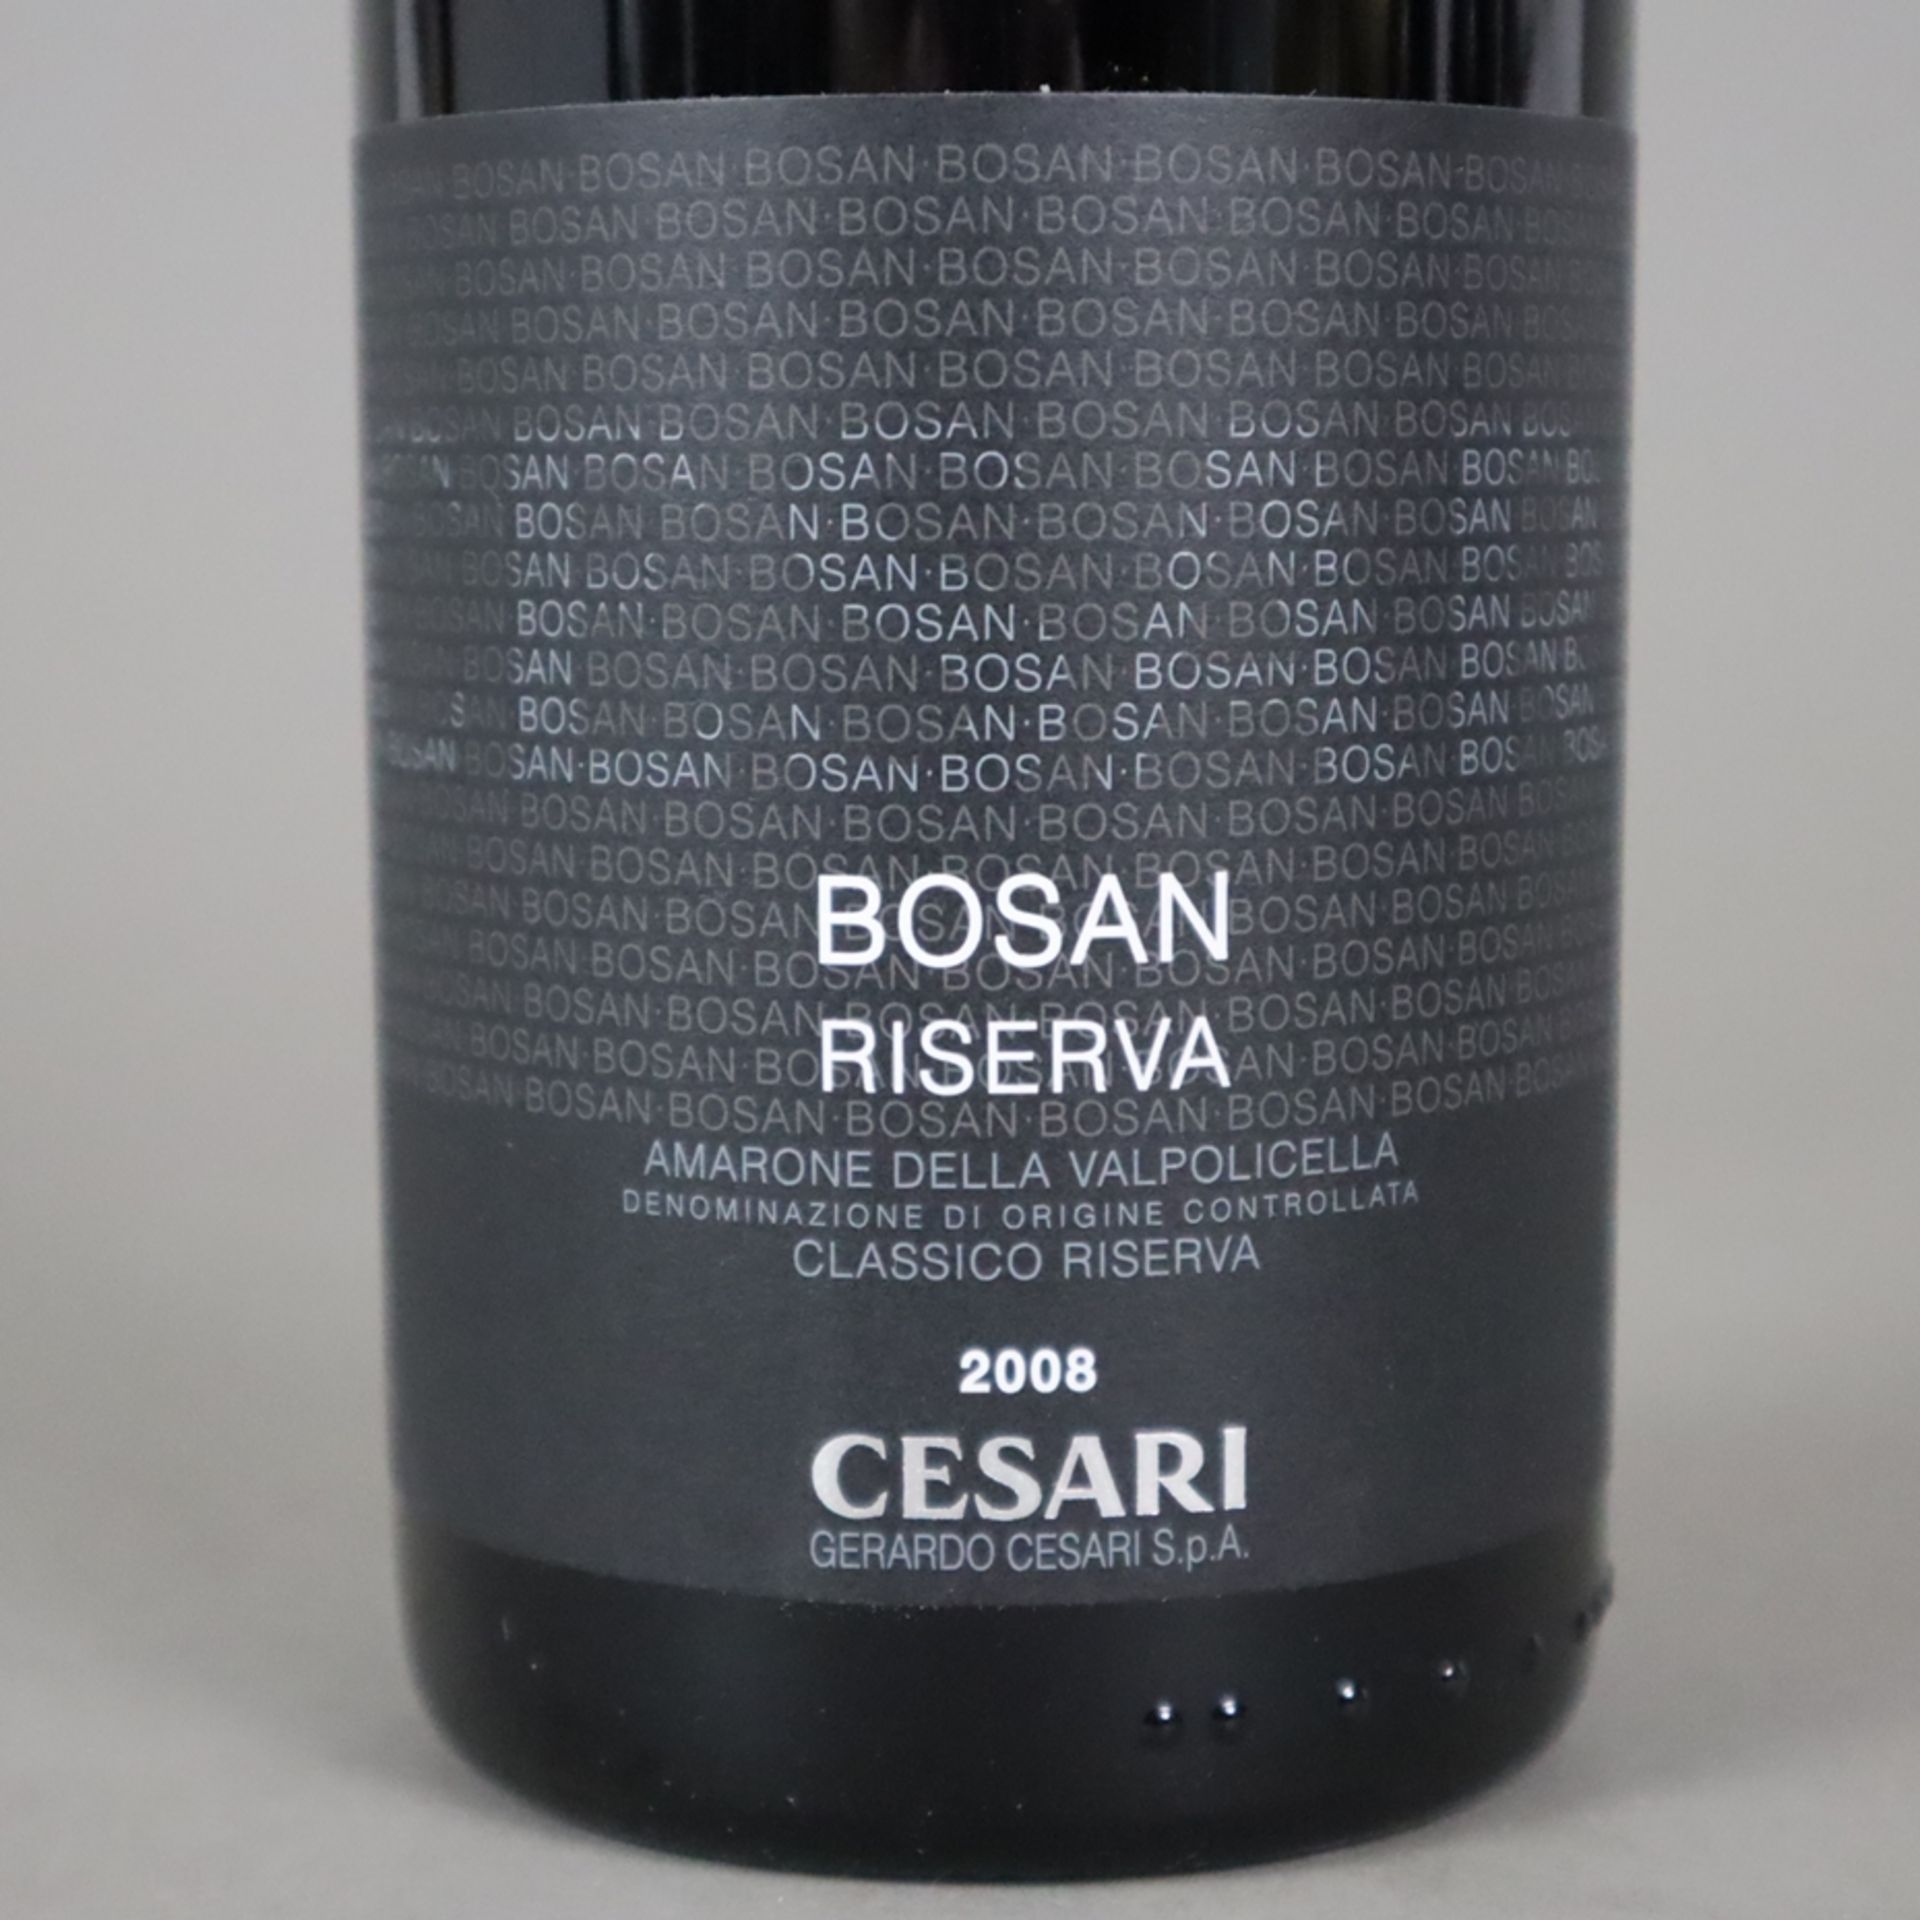 Weinkonvolut - 3 Flaschen, Cesari Amarone Bosan Riserva, Classico Riserva, Jahrgang 2008, 0,7 Liter - Image 3 of 4